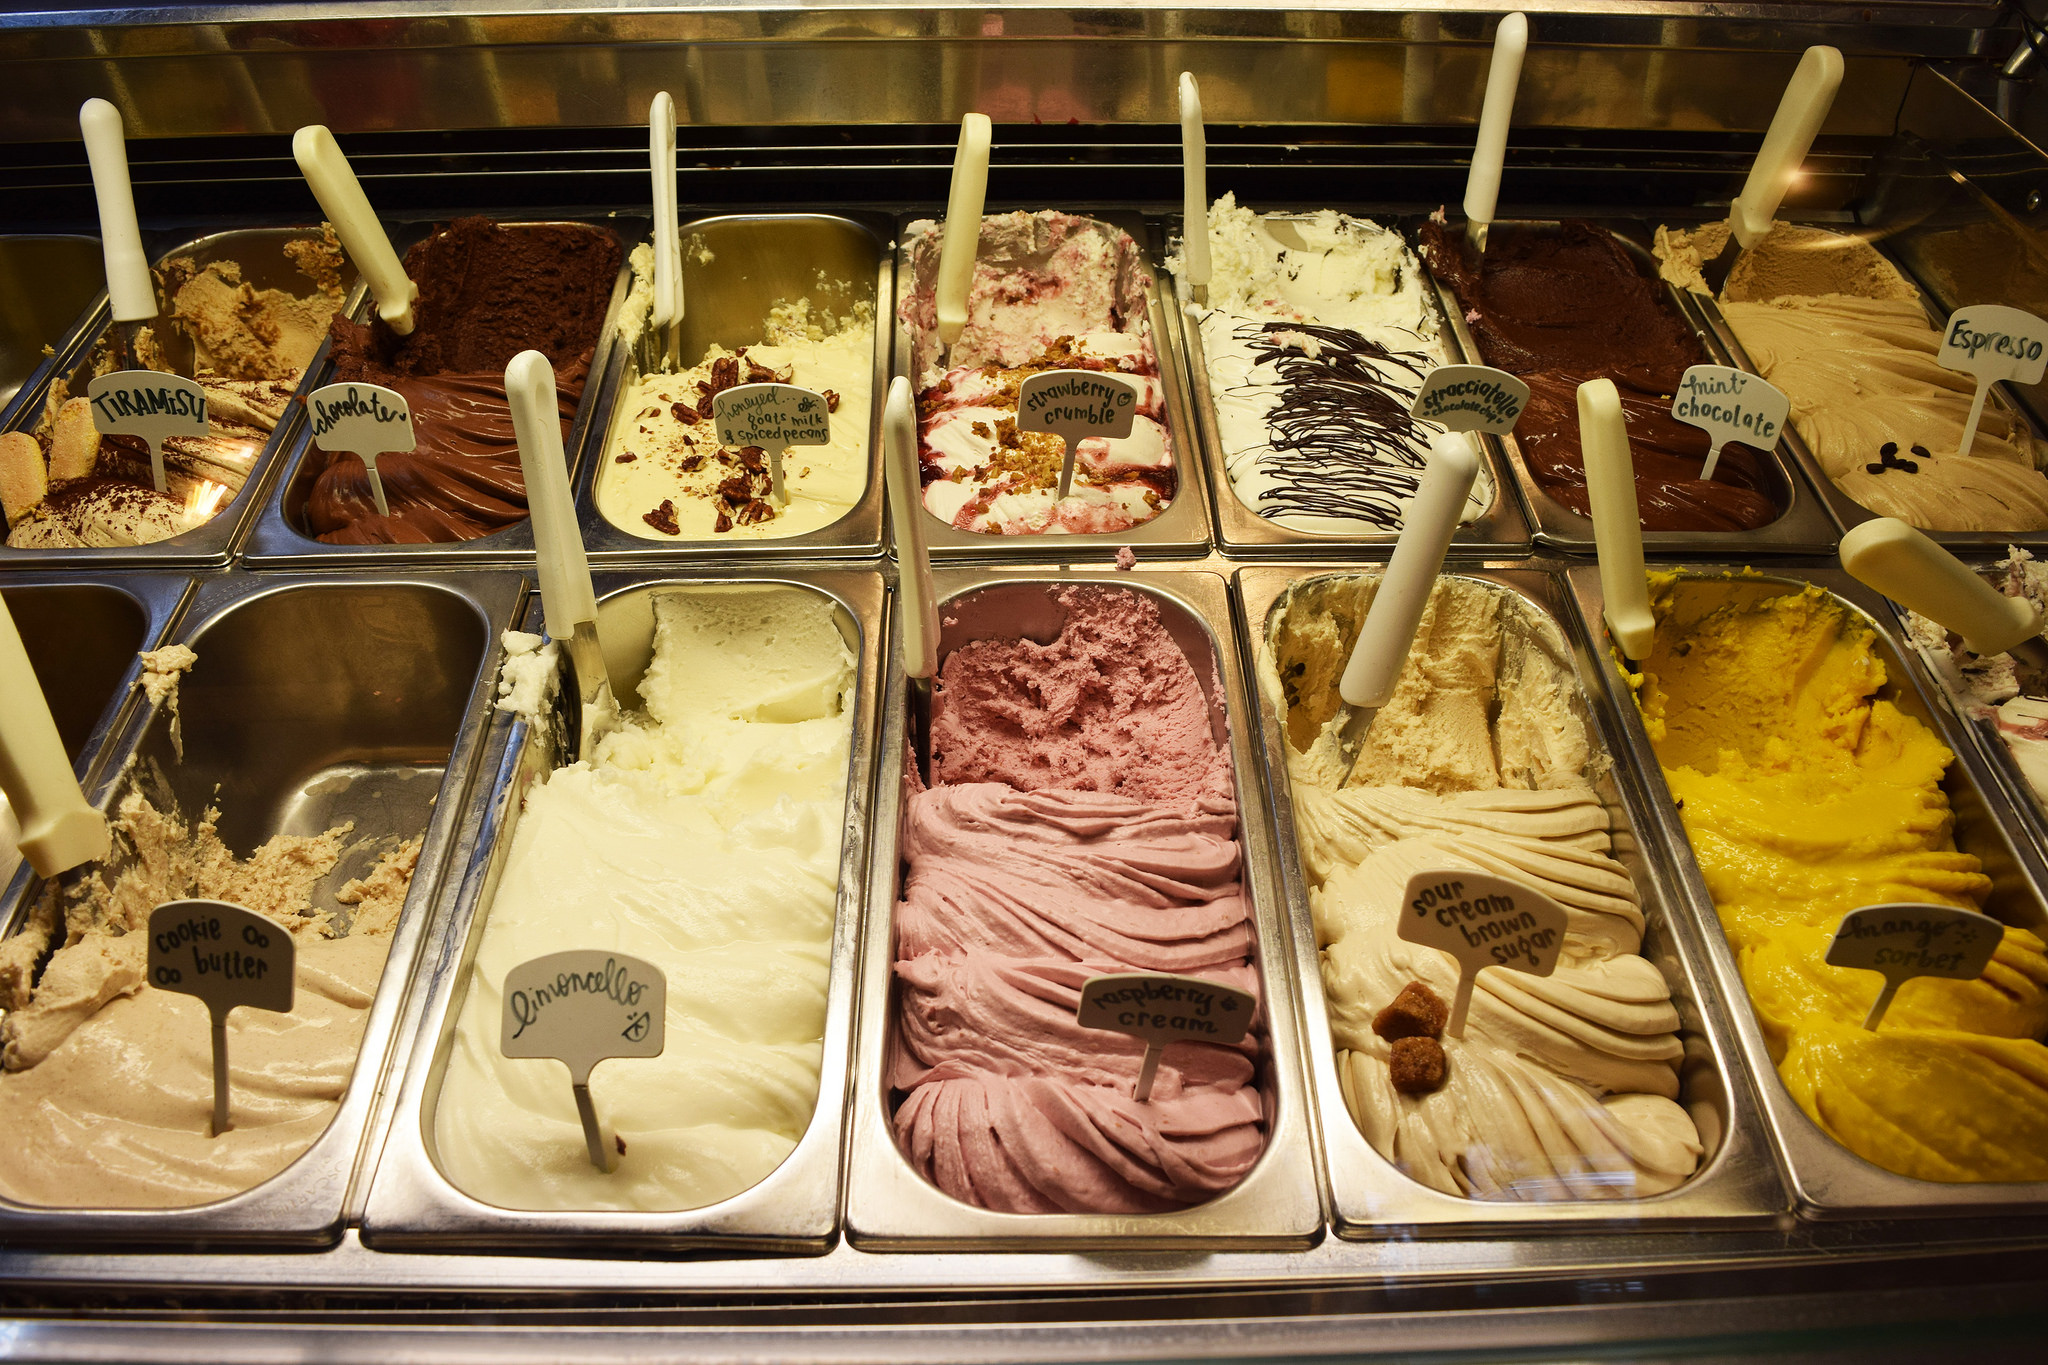 Selection of freshly made gelato at EscoGelato in Escondido. (Michelle Wilkinson/The Telescope)